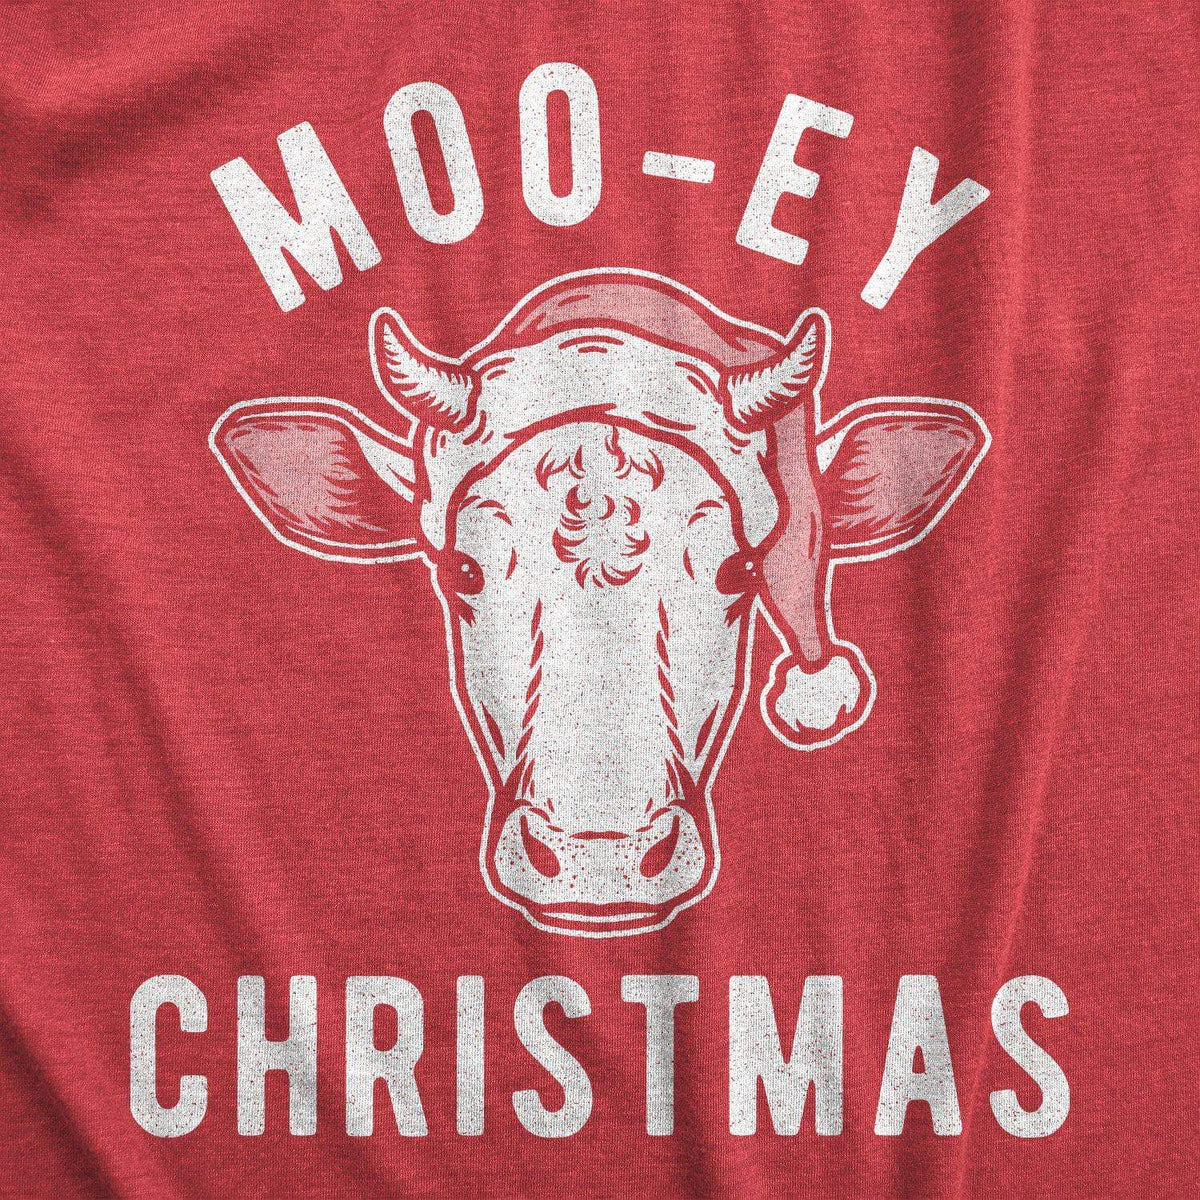 Moo-ey Christmas Men&#39;s Tshirt - Crazy Dog T-Shirts